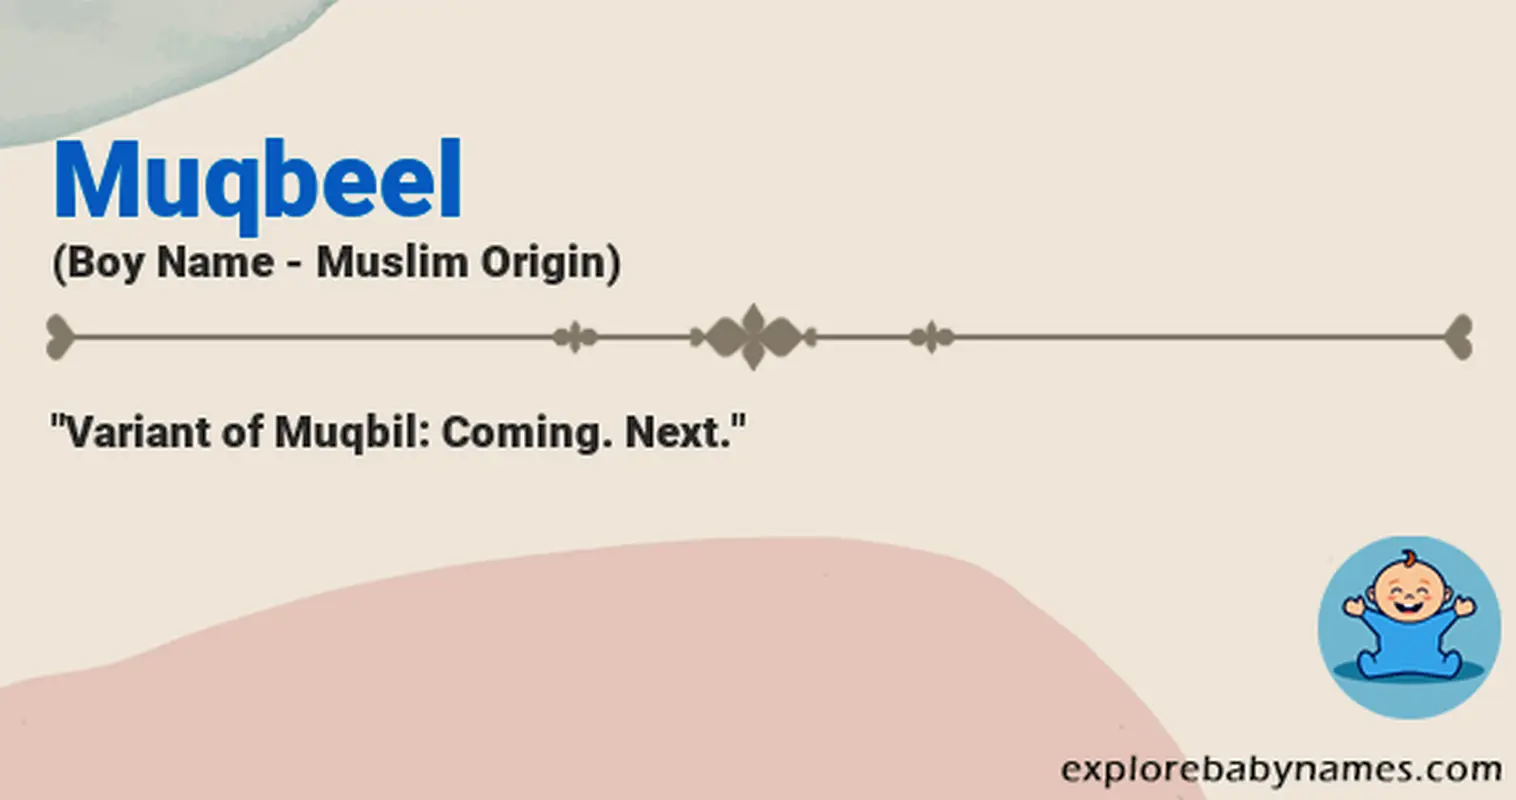 Meaning of Muqbeel